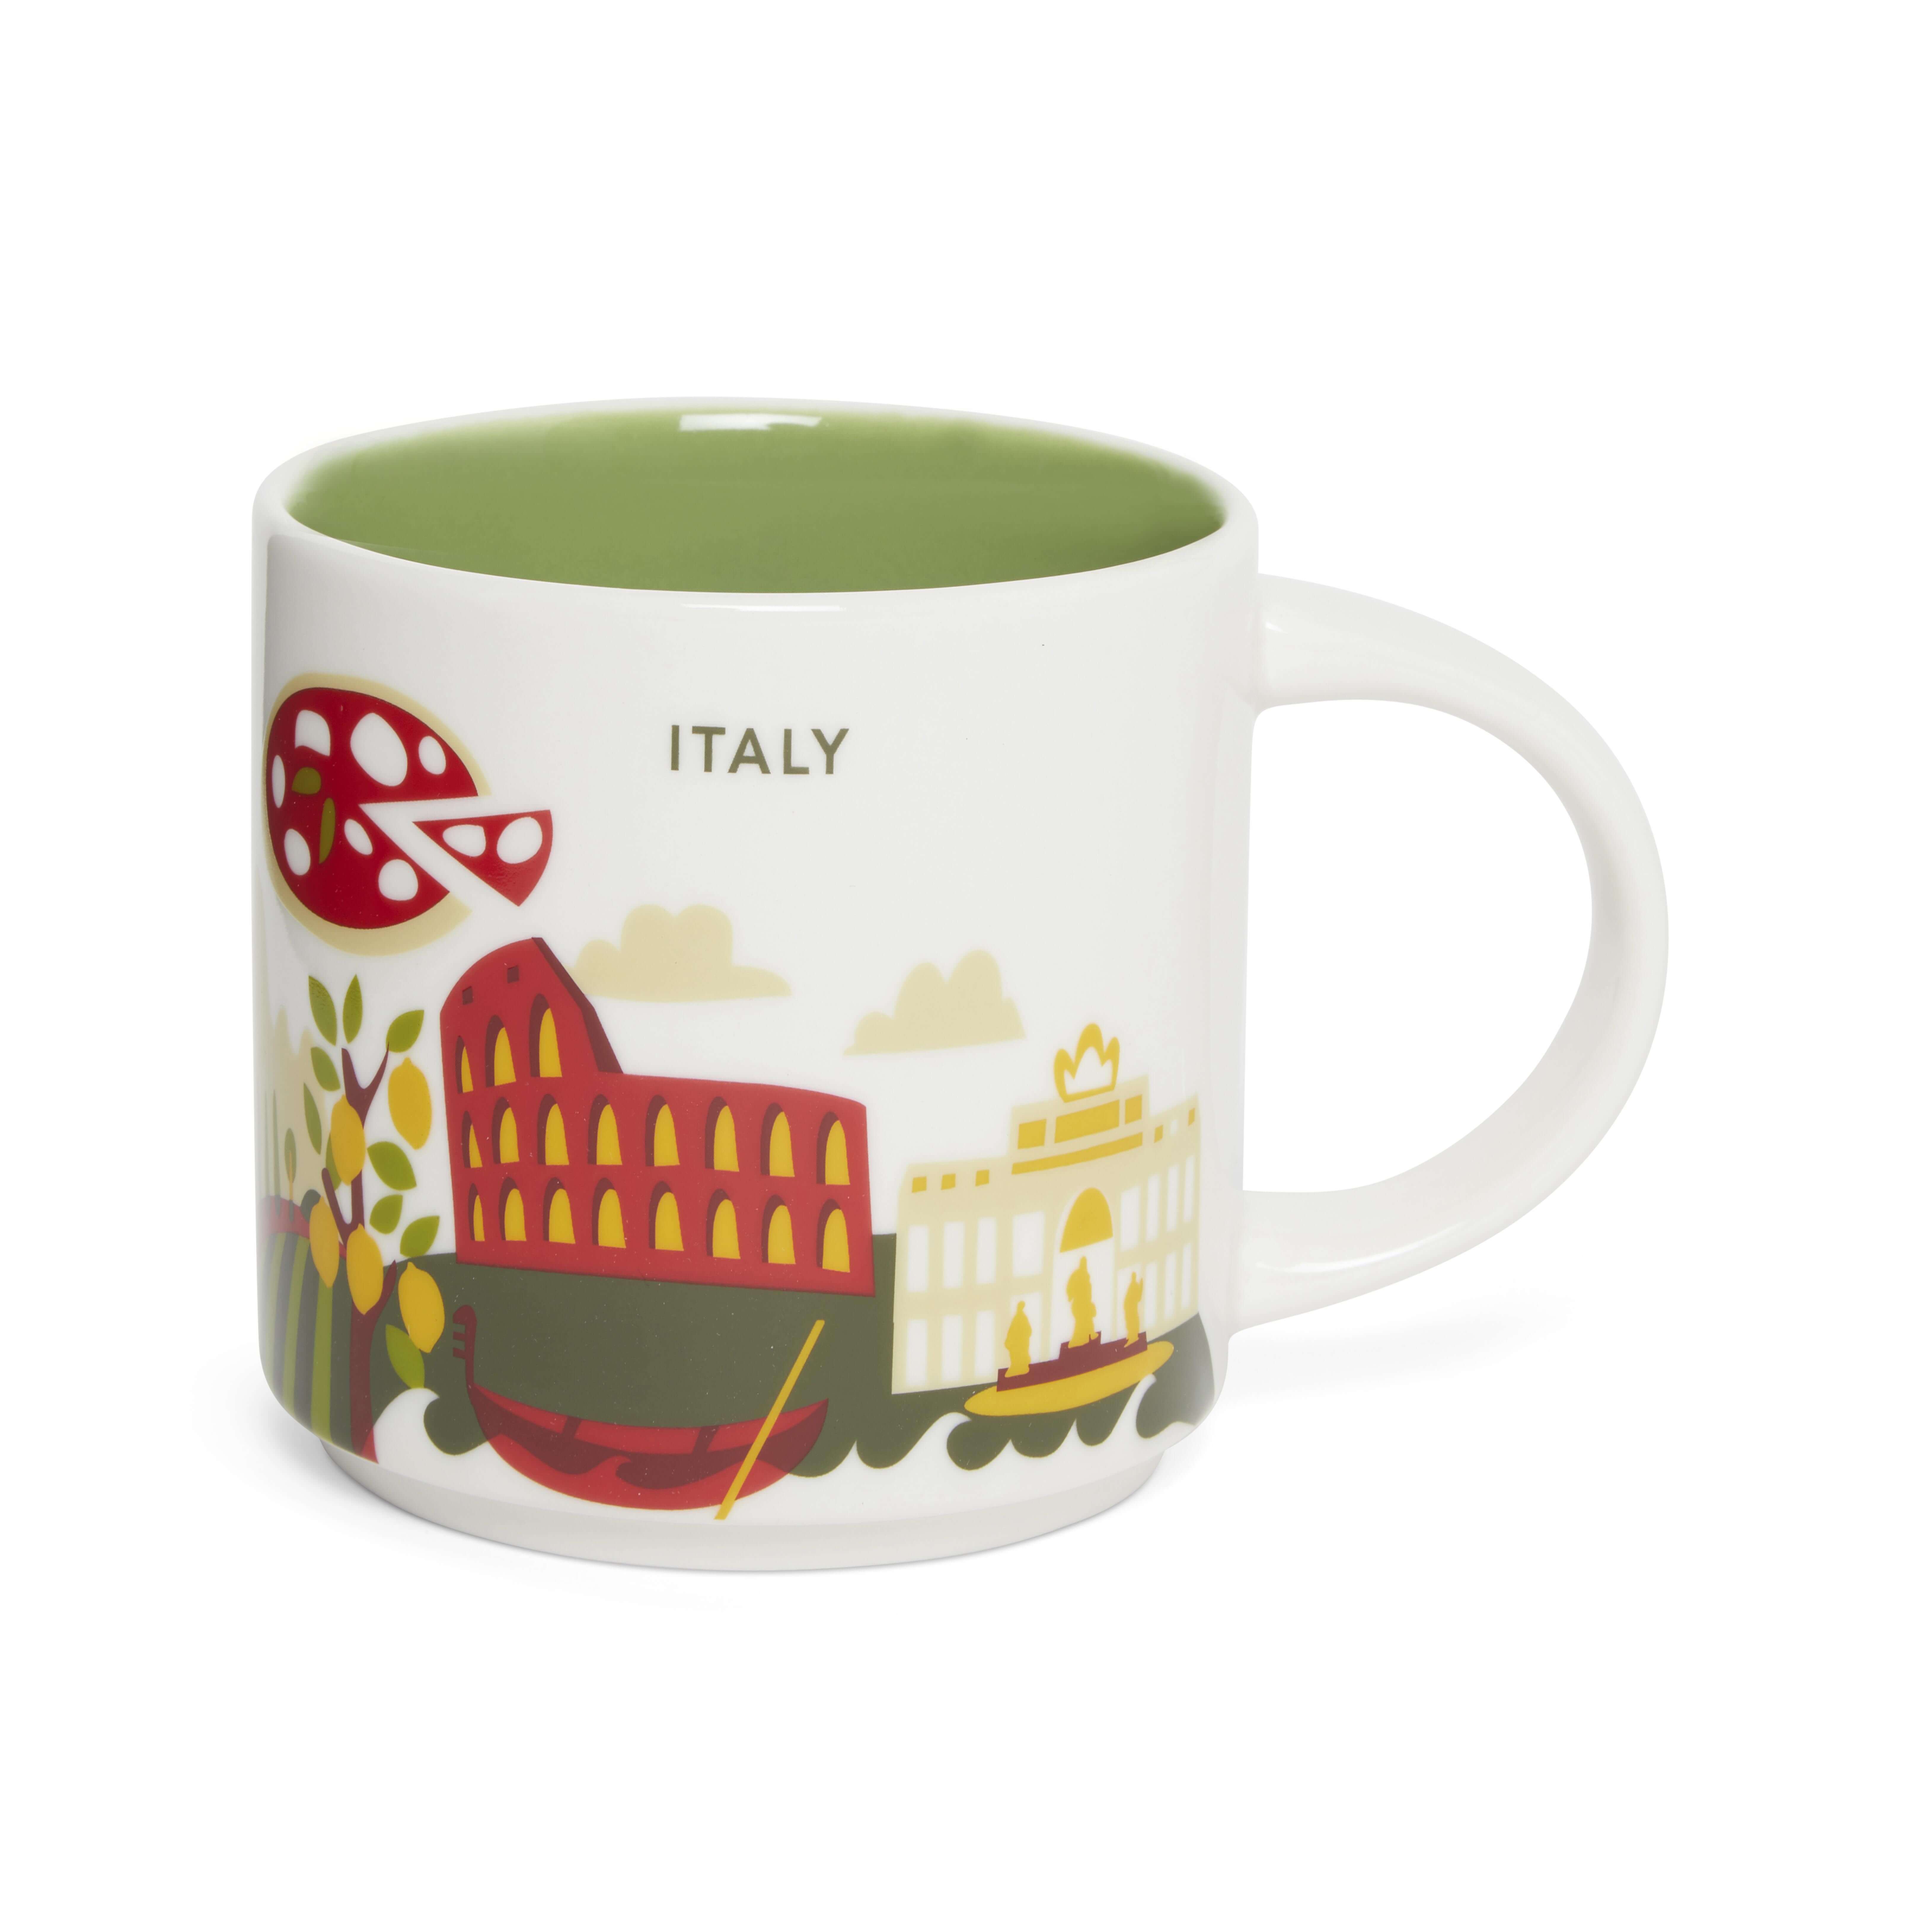 Italy YAH Country Mug, , large